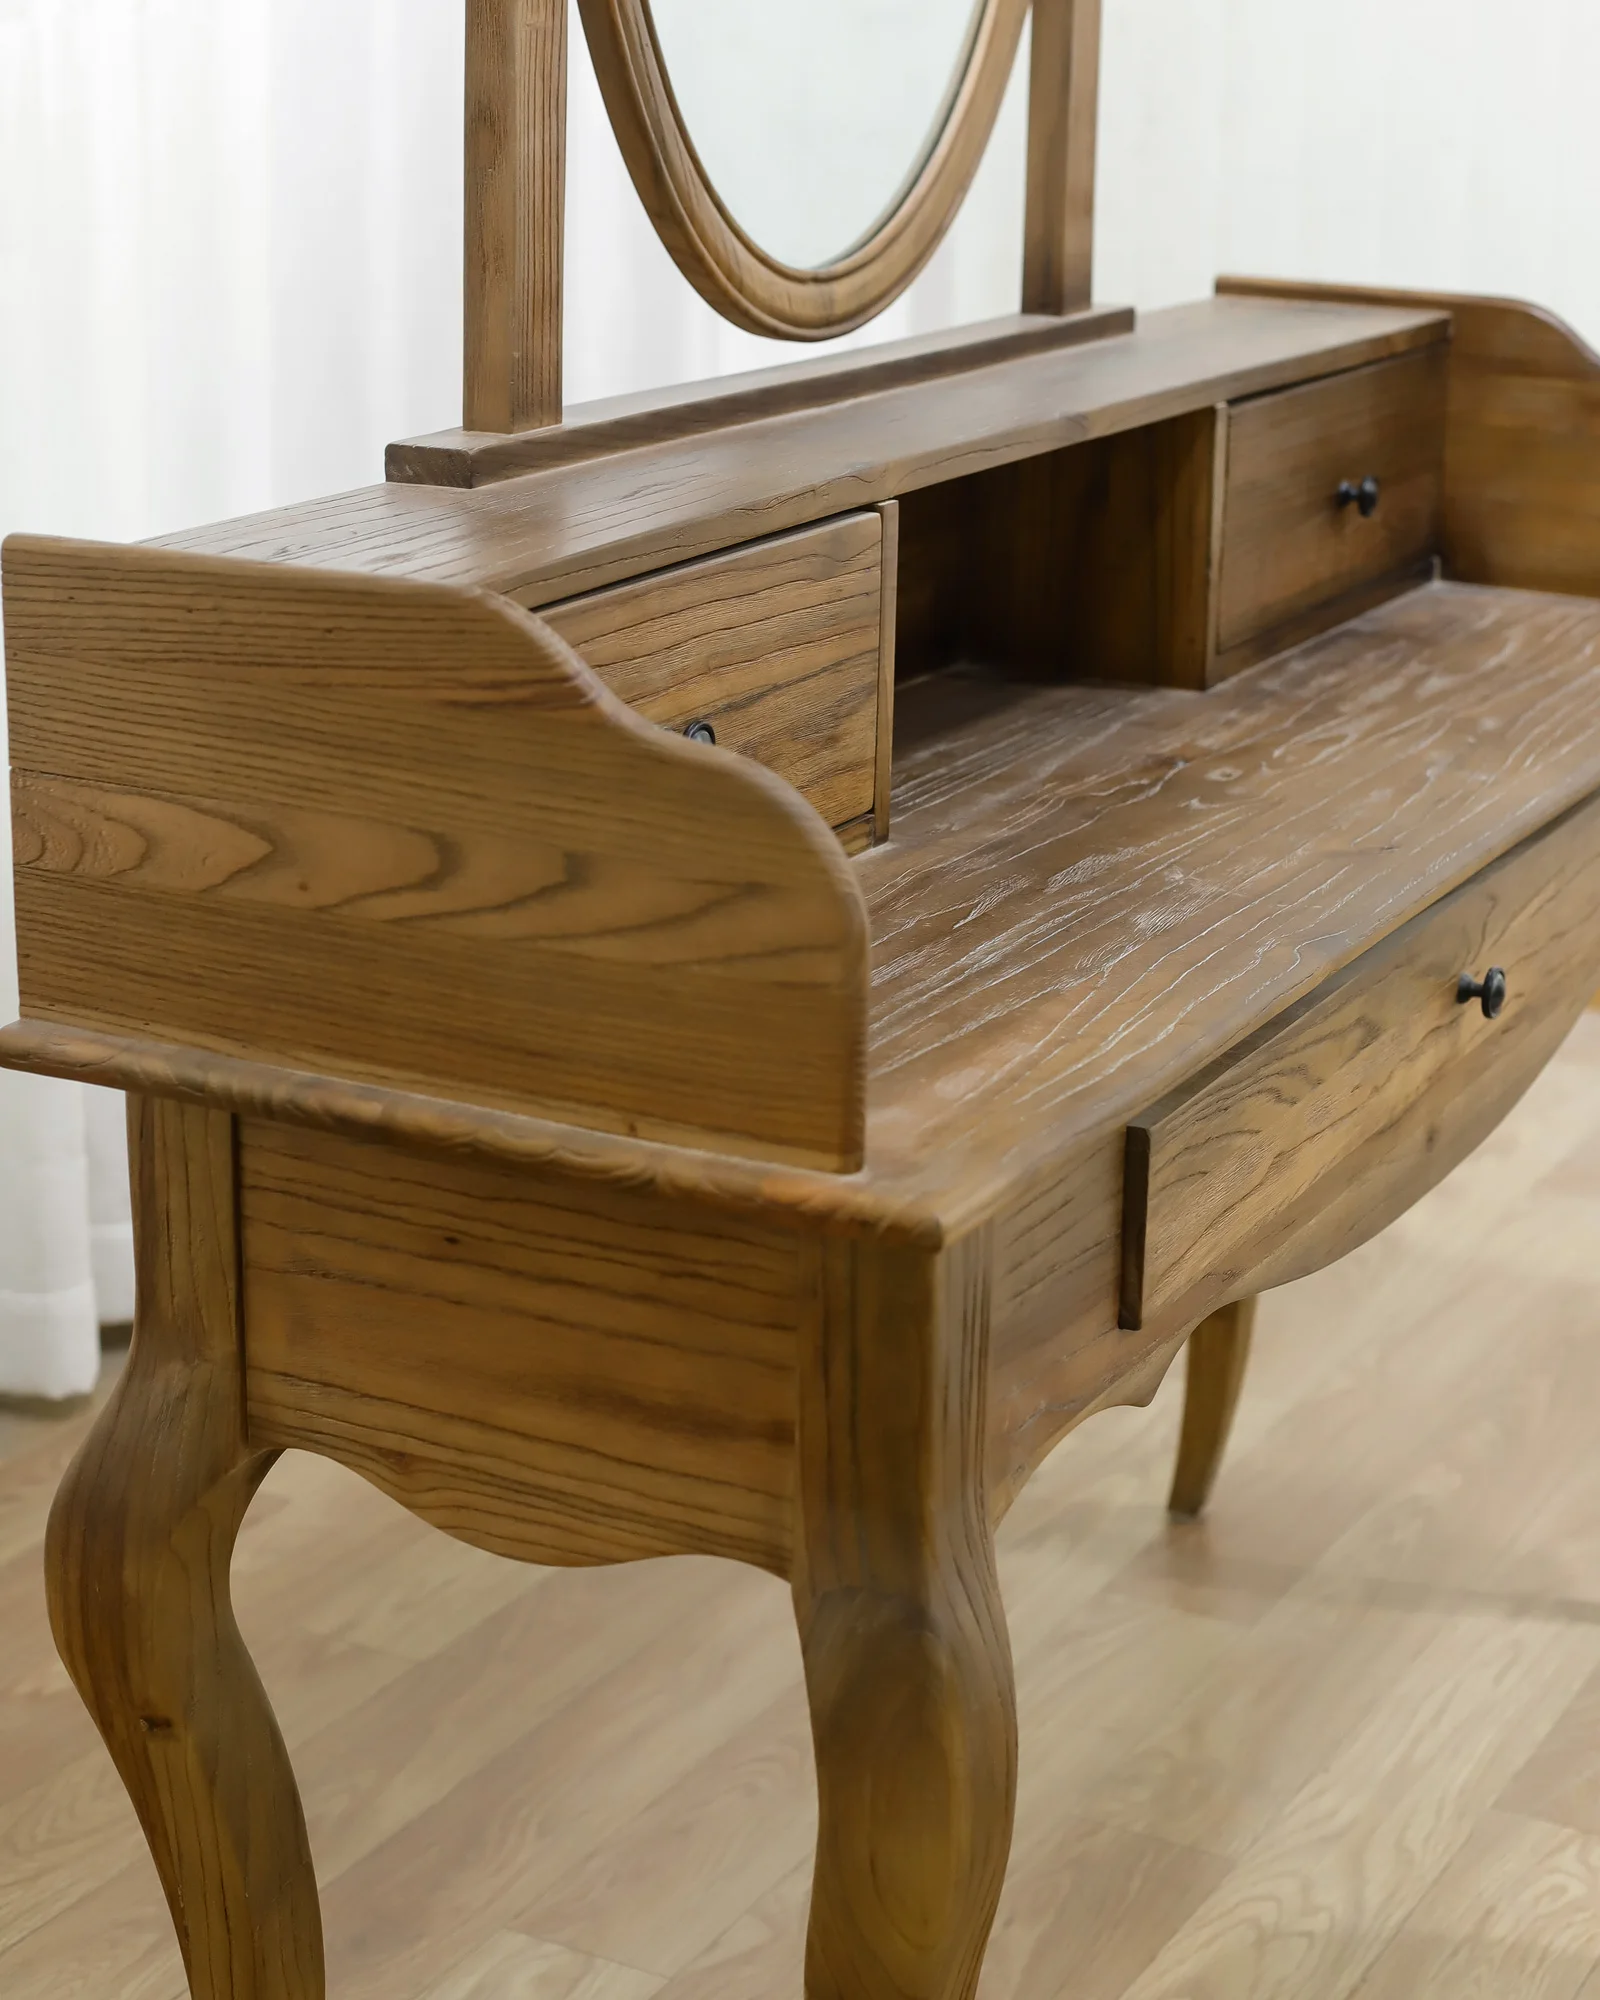 
European Style Bedroom furniture Antique Makeup Vanity Dresser Desk with mirror and stool 